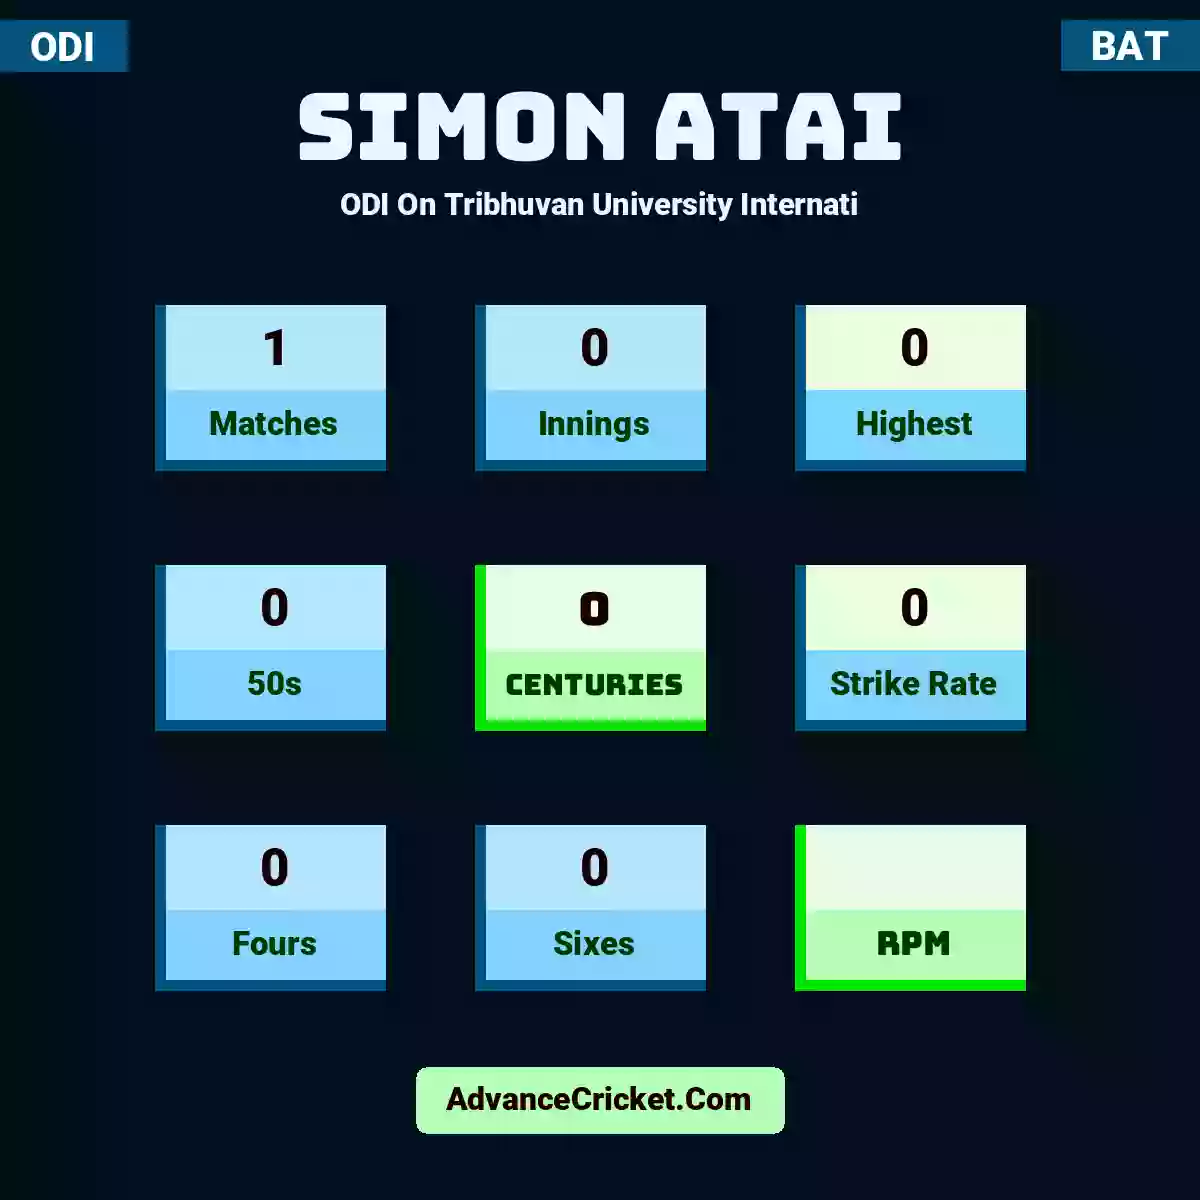 Simon Atai ODI  On Tribhuvan University Internati, Simon Atai played 1 matches, scored 0 runs as highest, 0 half-centuries, and 0 centuries, with a strike rate of 0. S.Atai hit 0 fours and 0 sixes.